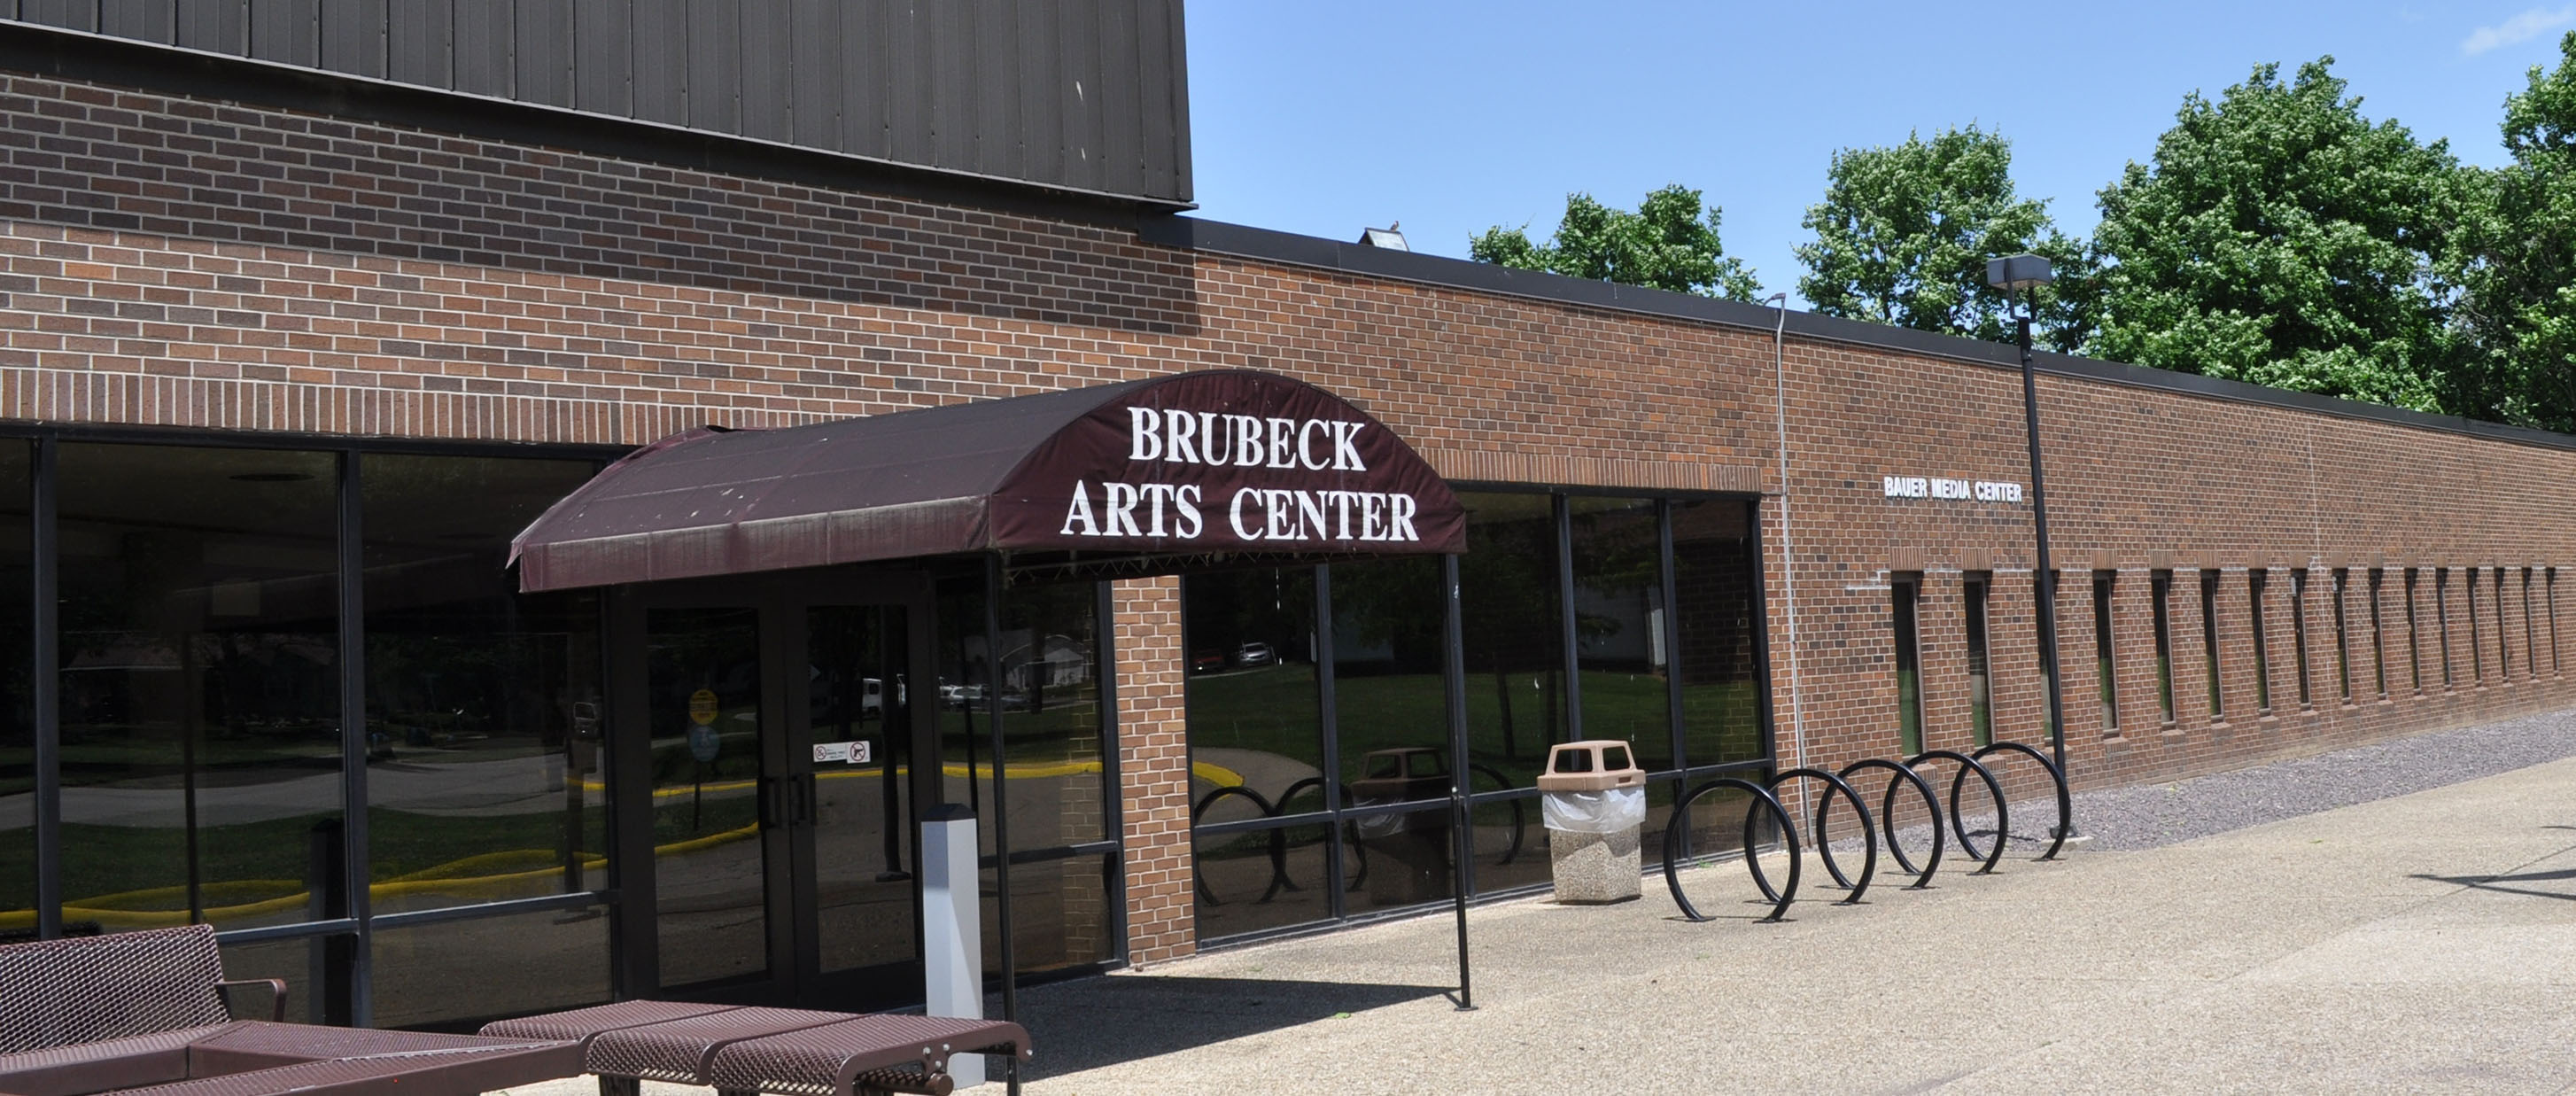 An exterior view of the Brubeck Arts Center